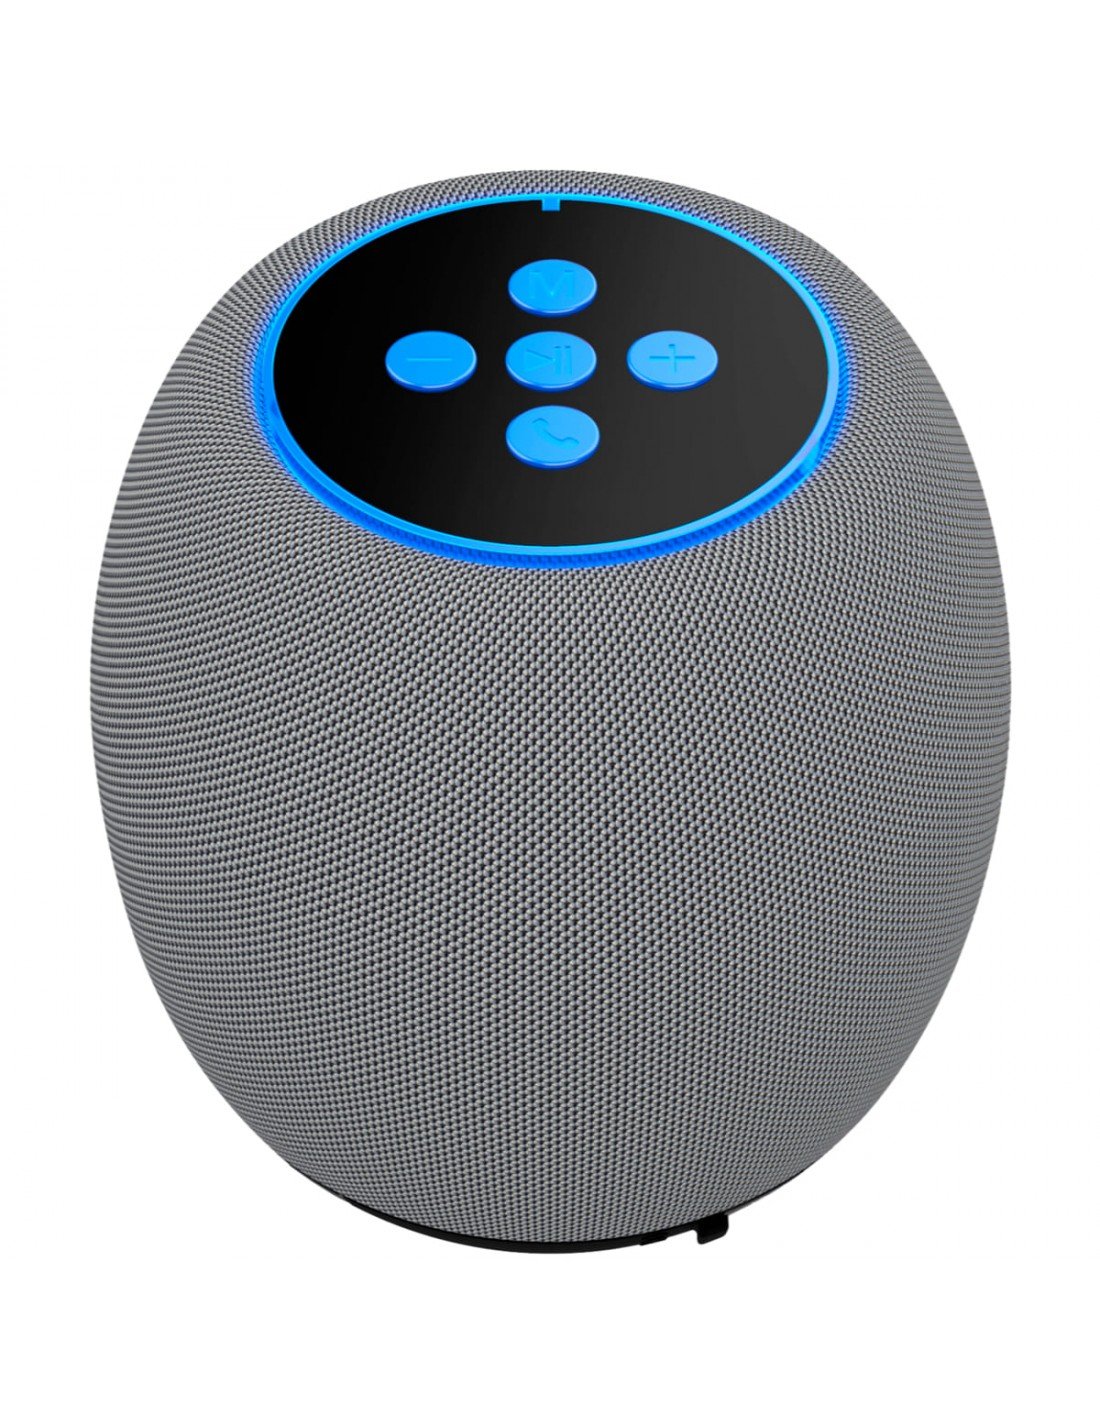 Parlante Portable Uvo Movisun Doble Altavoz Función Bluetooth, Radio FM  Gris